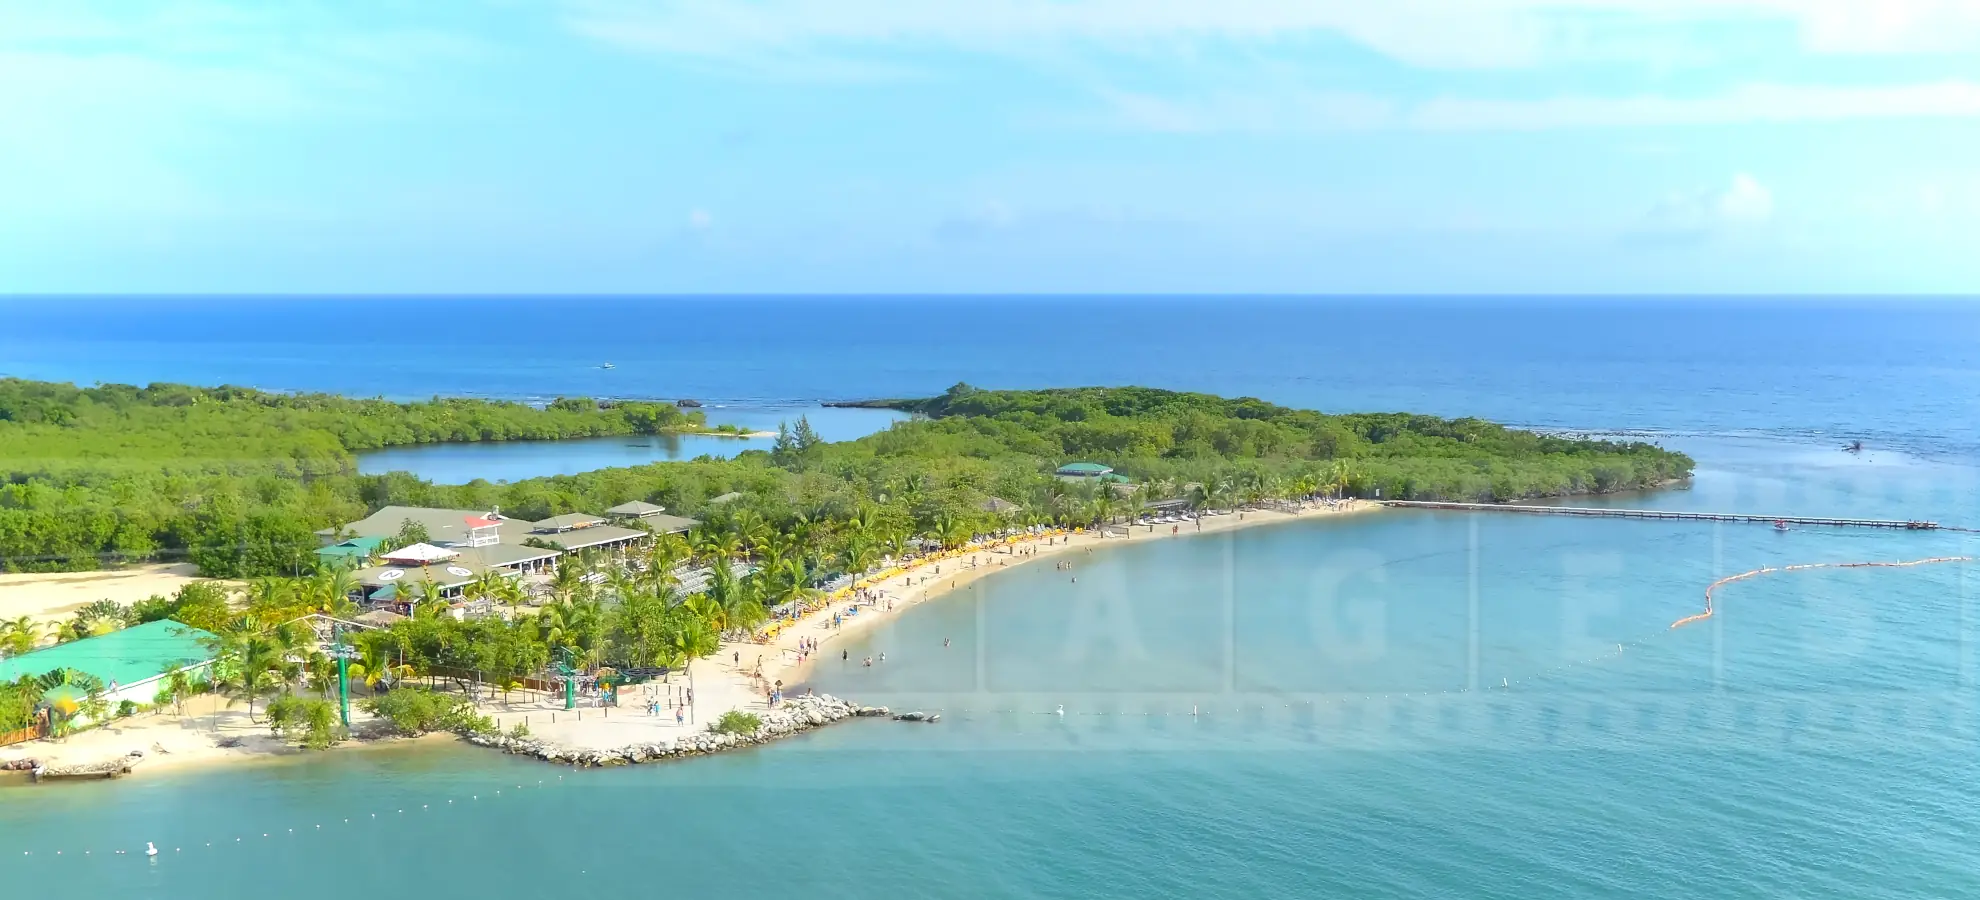 Mahogany Bay is a private Caribbean beach on Roatan Island, Honduras